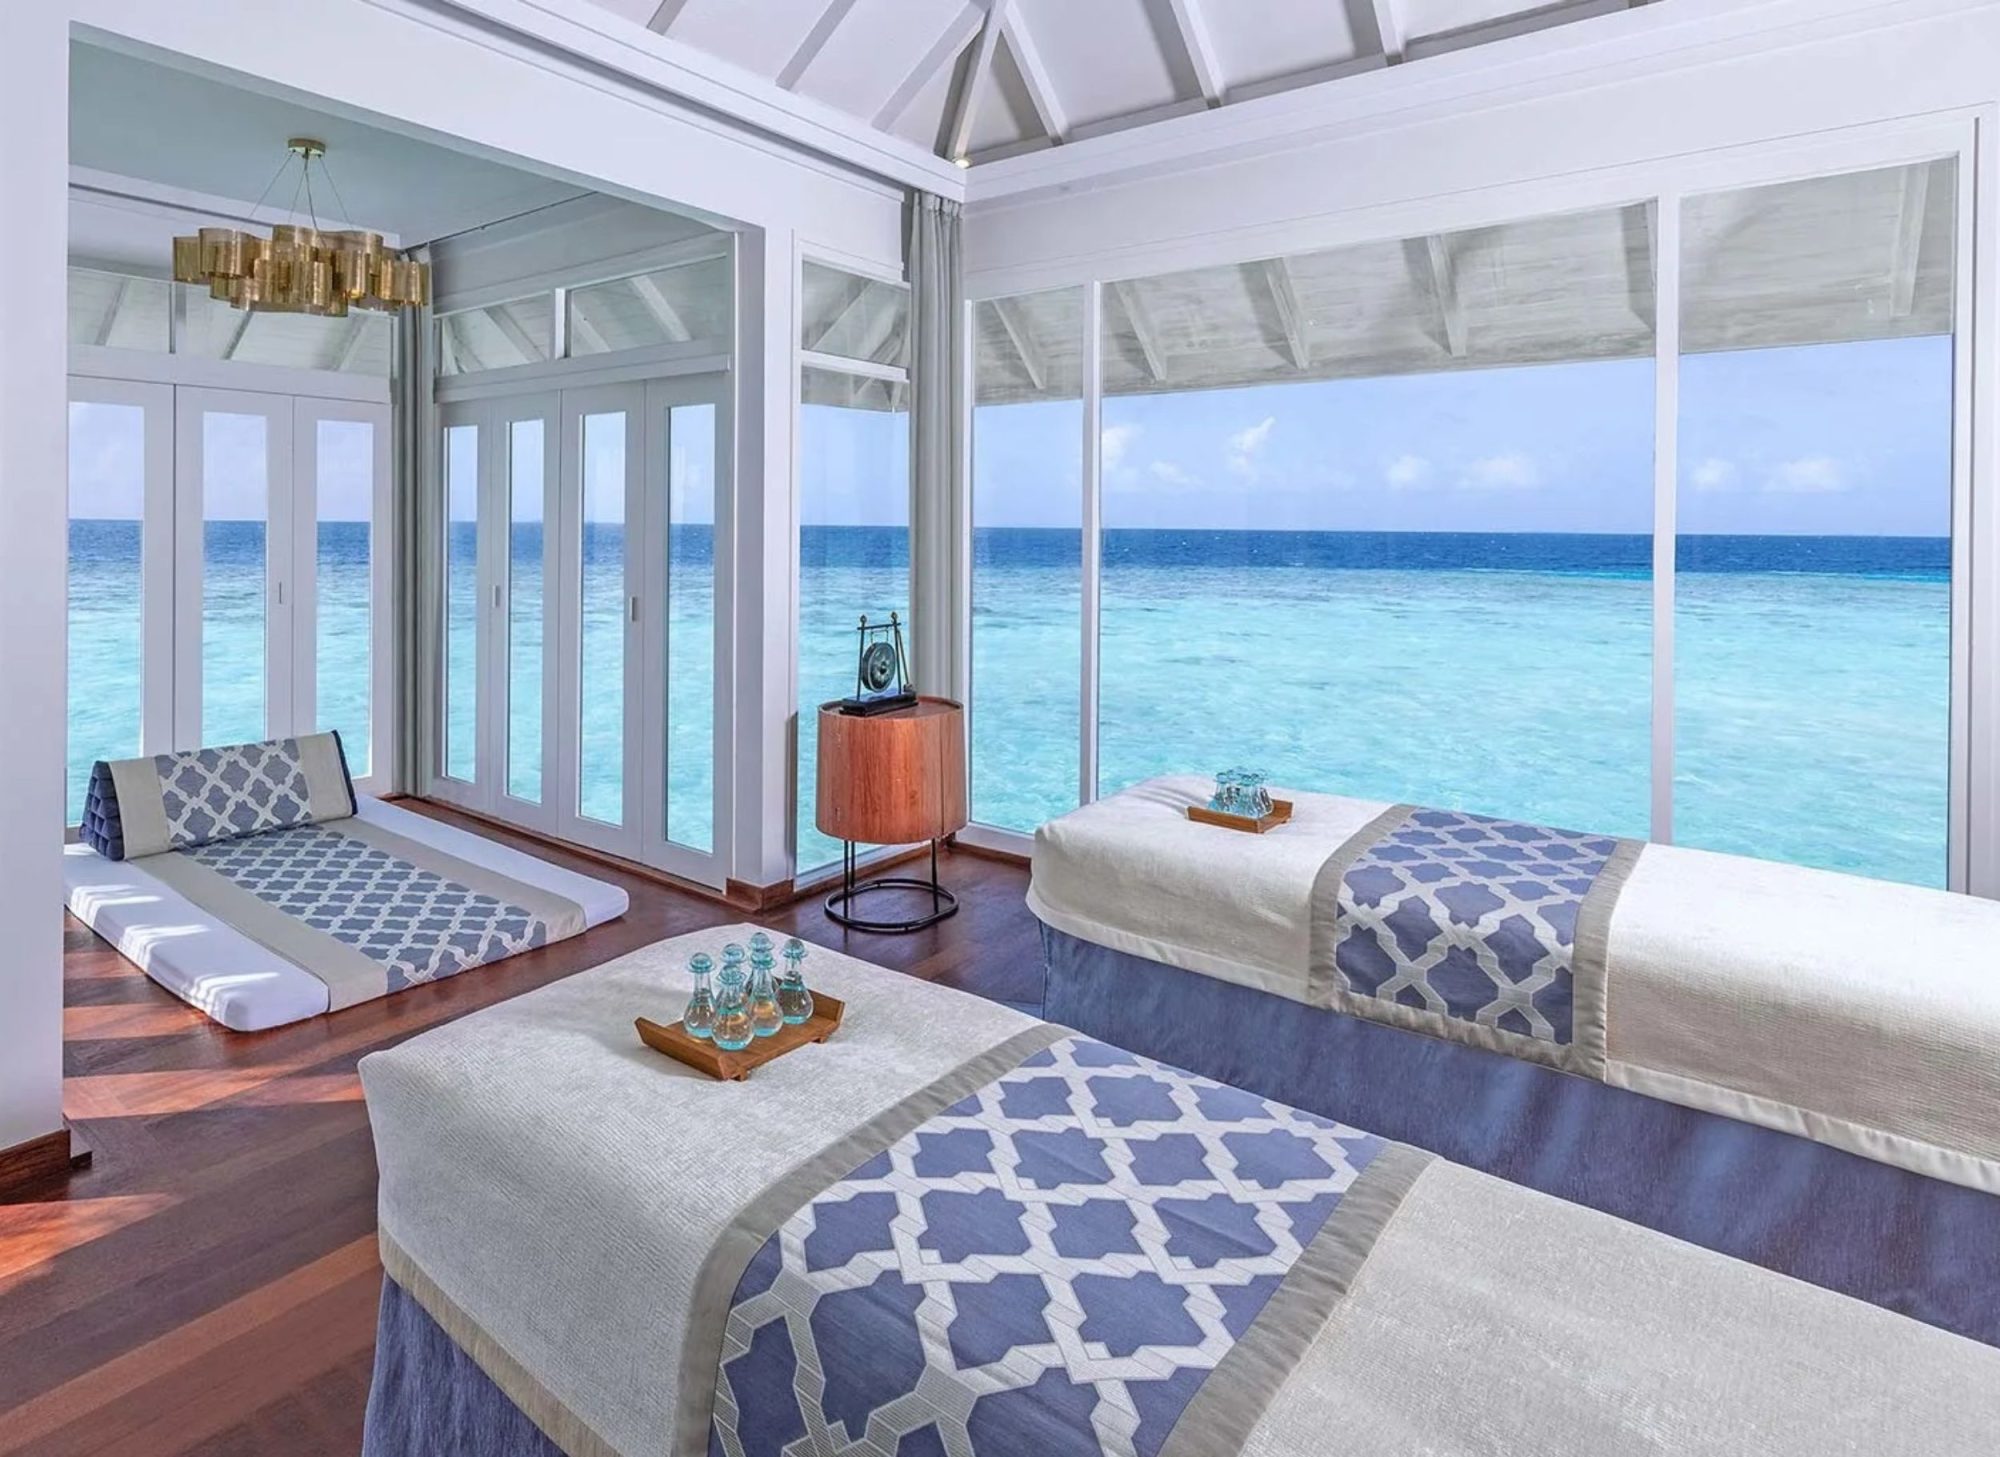 Anantara Kihavah Maldives Villas: An Enchanting Luxury Resort Sanctuary